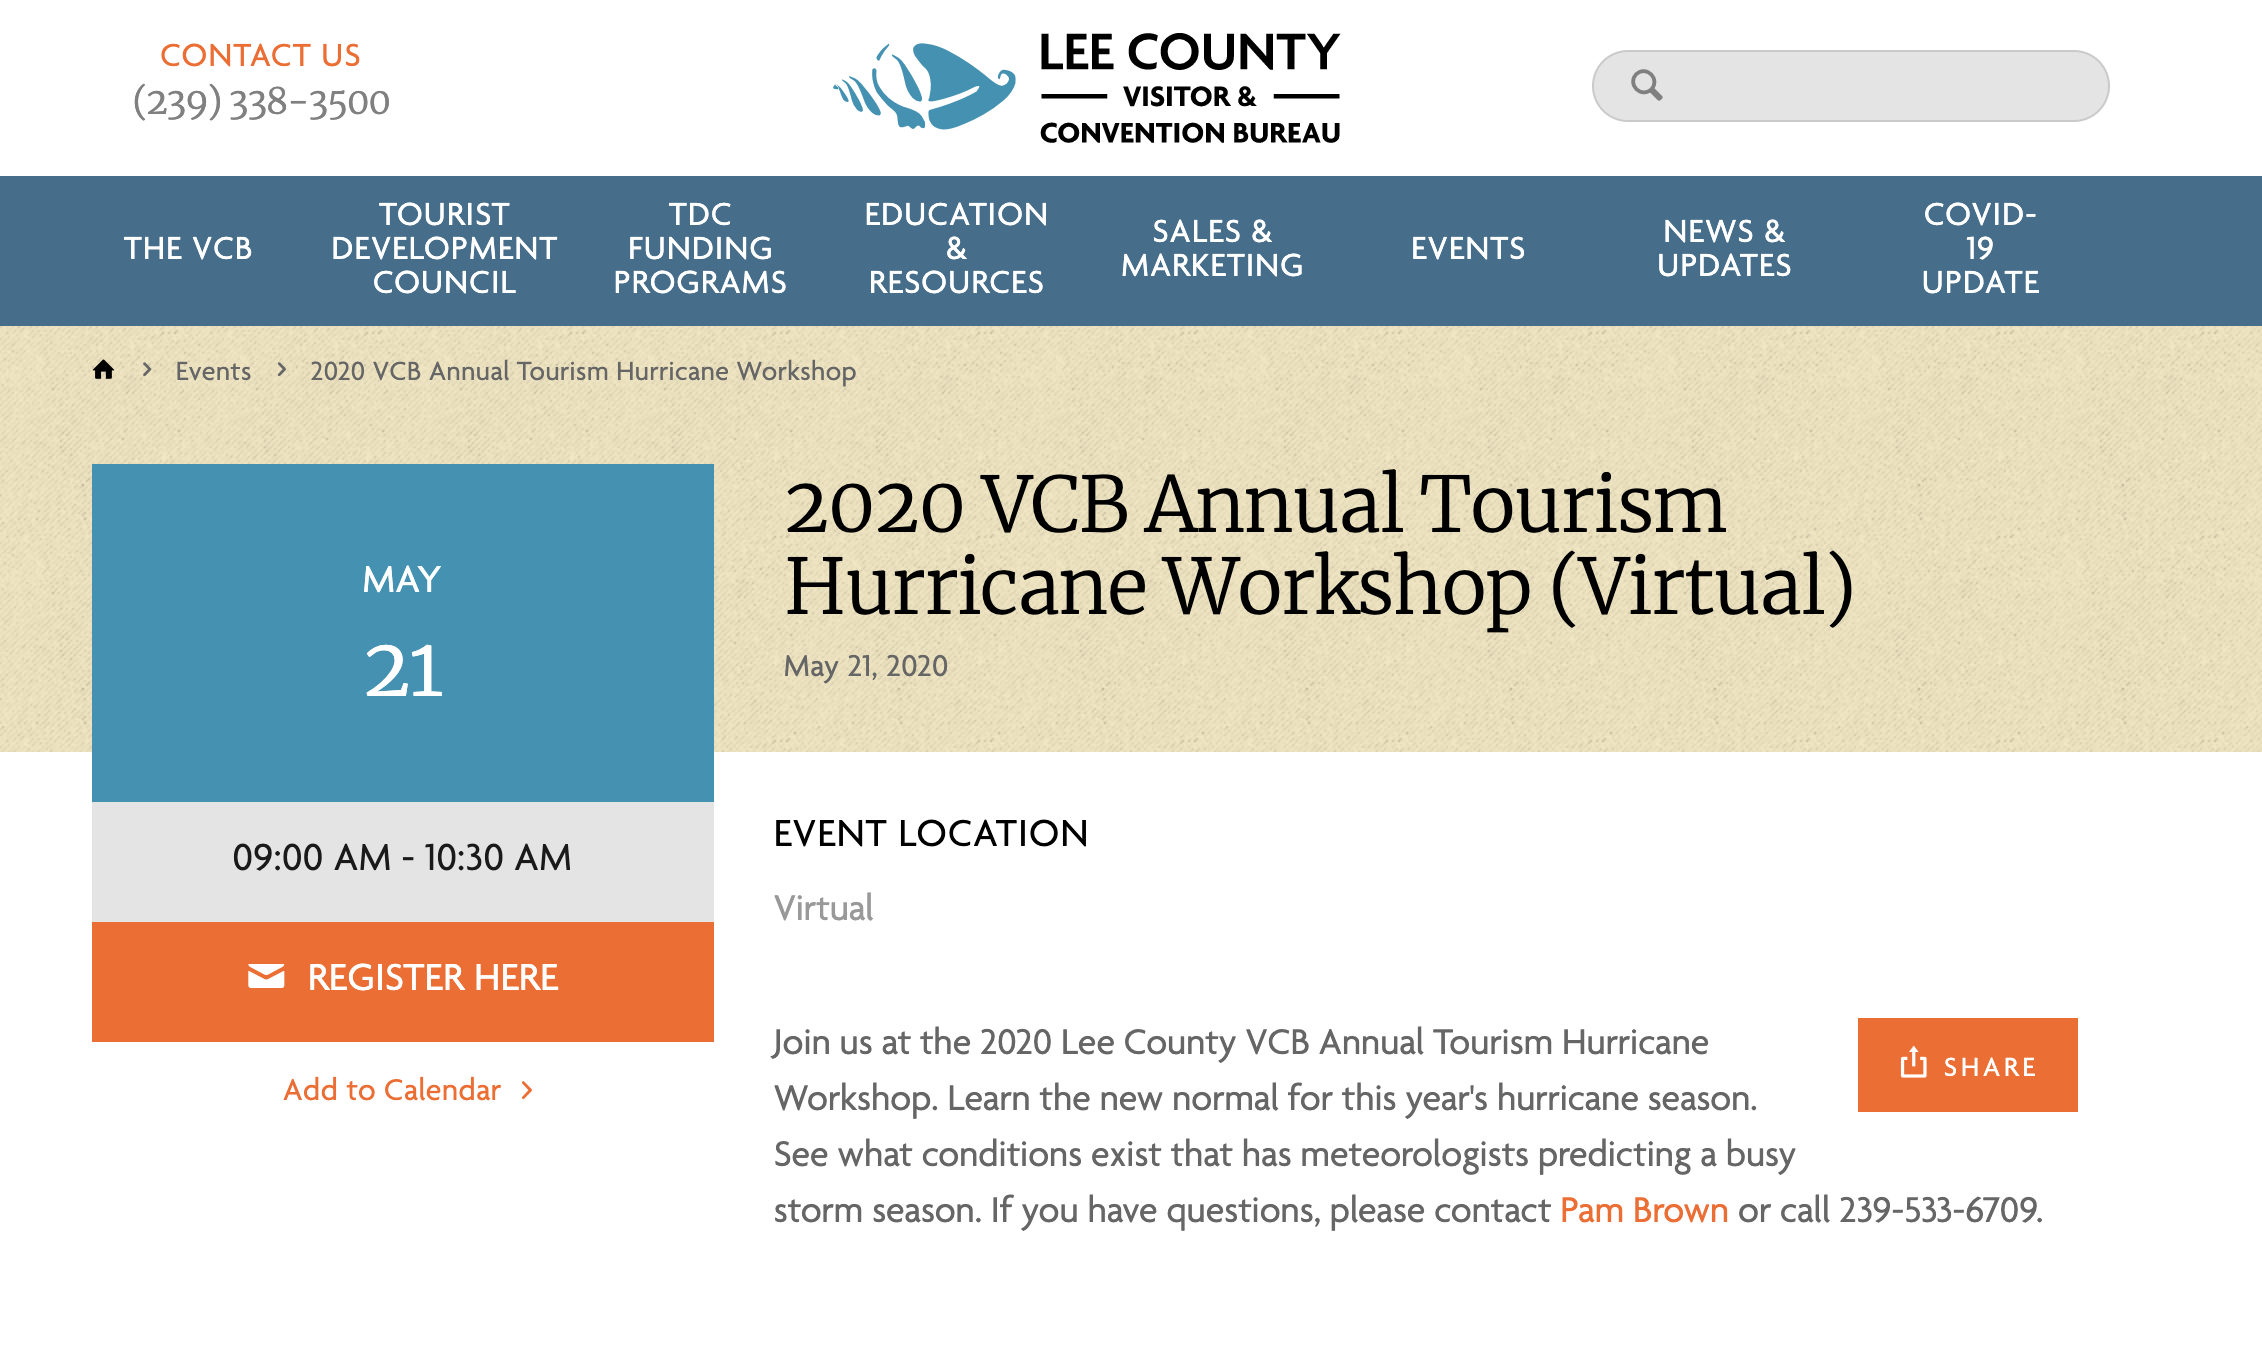 VCB Annual Tourism Hurricane Workshop - May 21